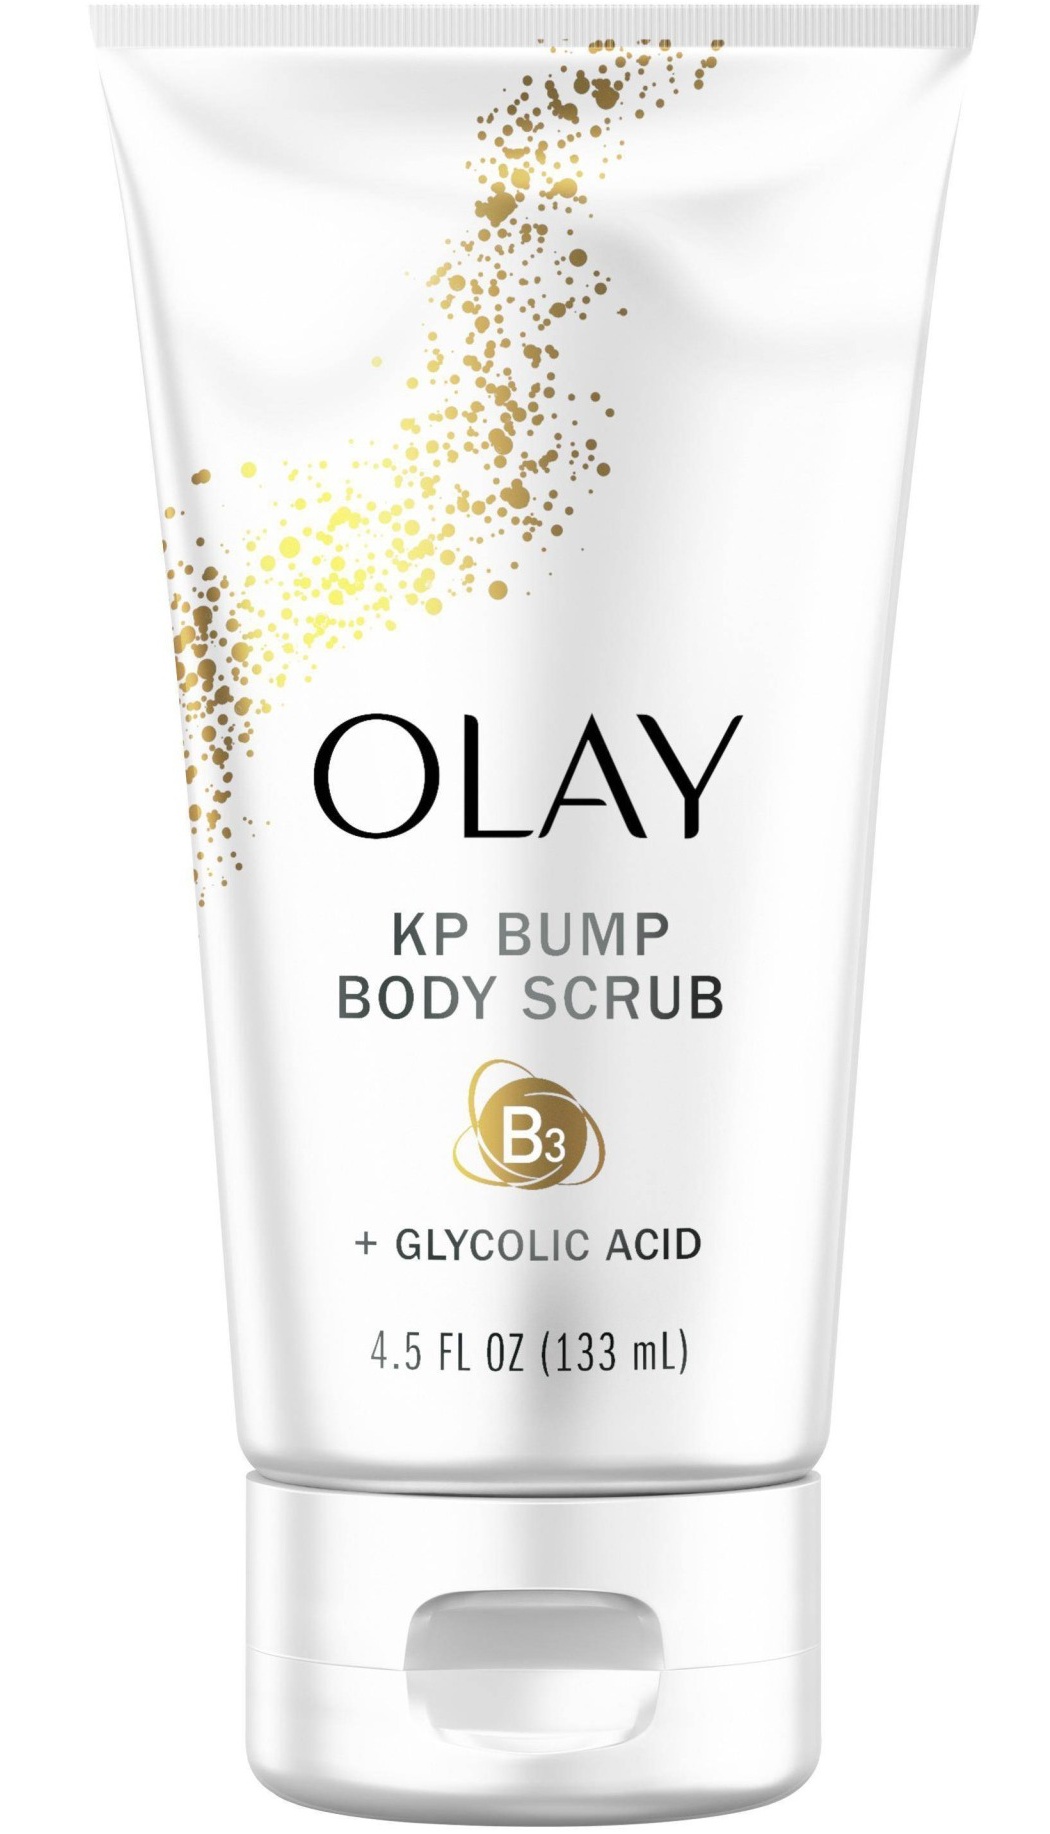 Olay Kp Bump Body Scrub With Glycolic Acid And Vitamin B3 Complex